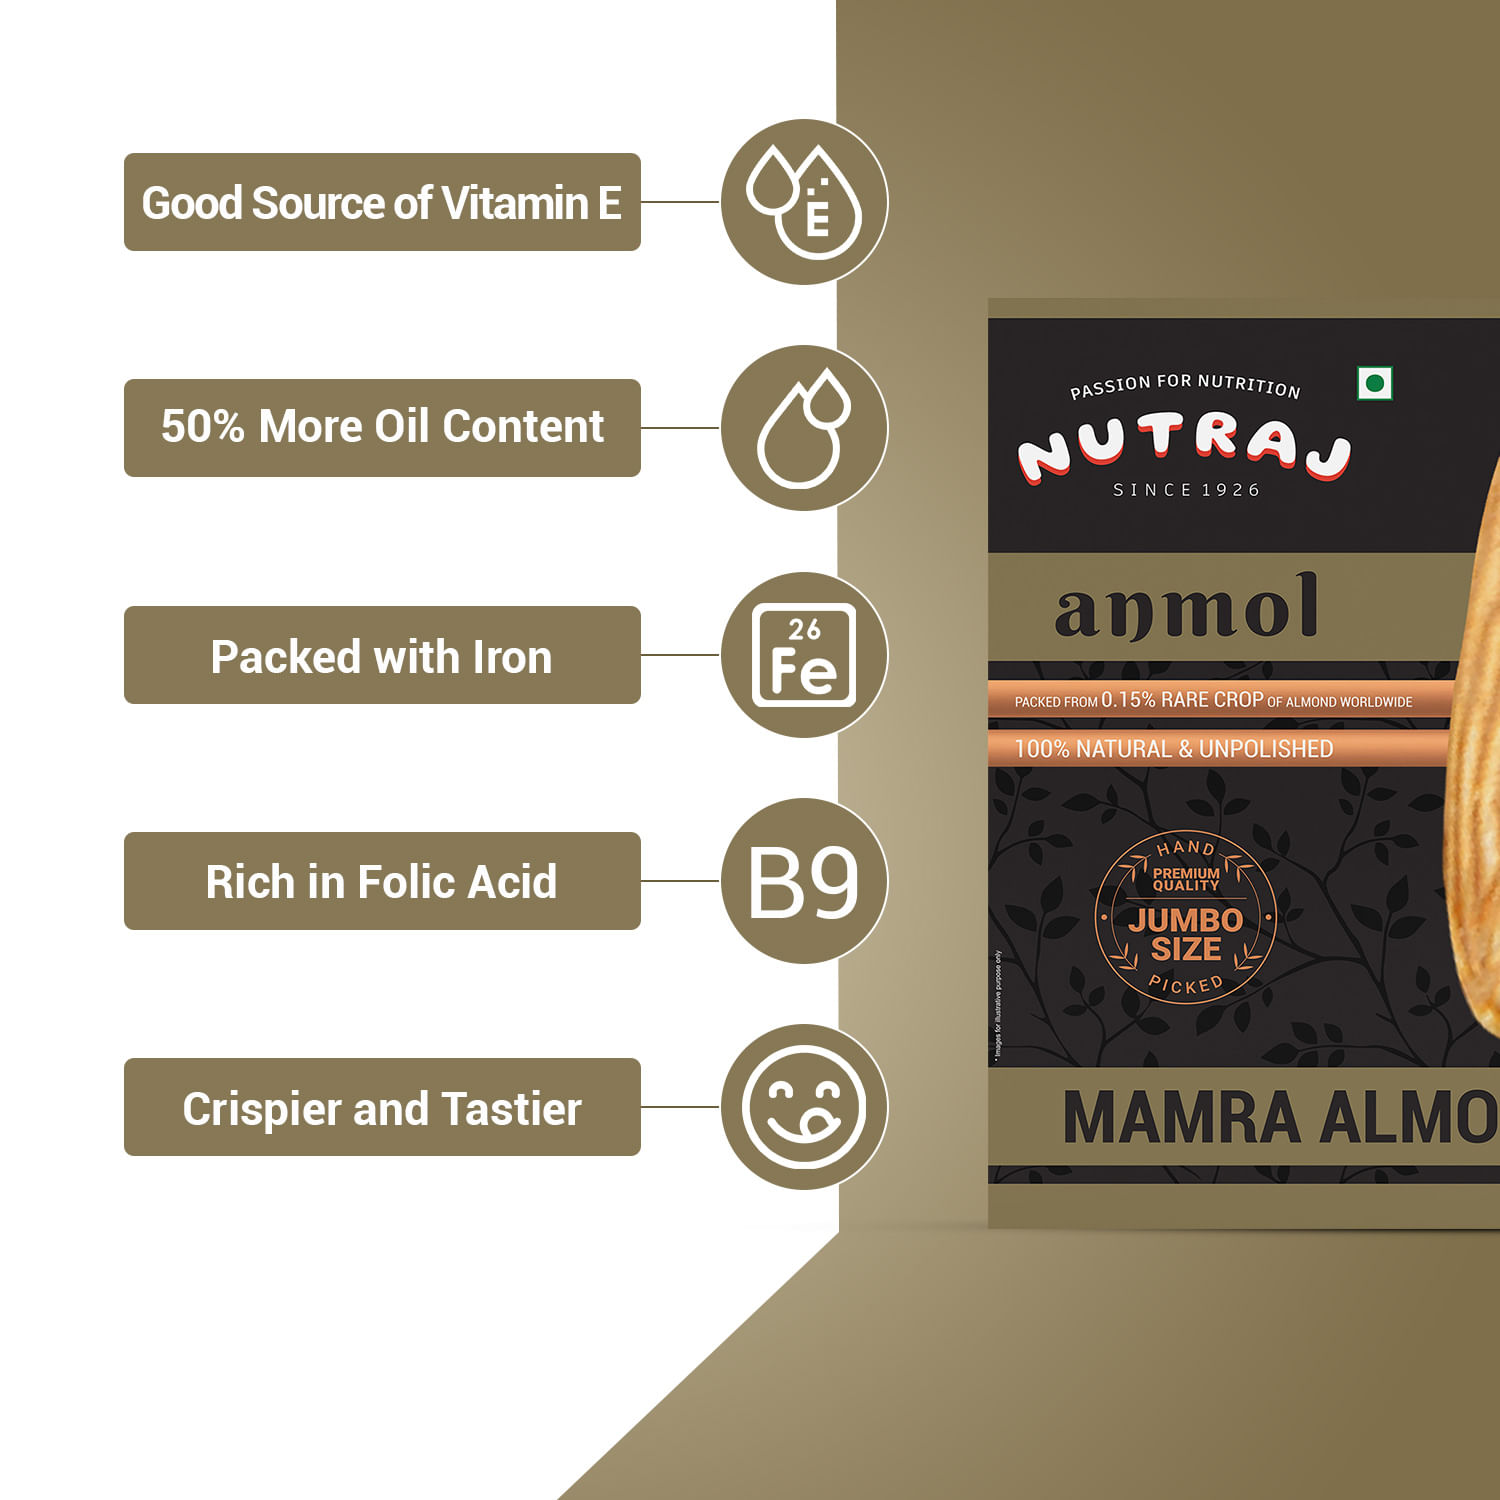 Anmol Premium Mamra Almond Kernel (Jumbo Size - 100% Natural - Rare Crop)